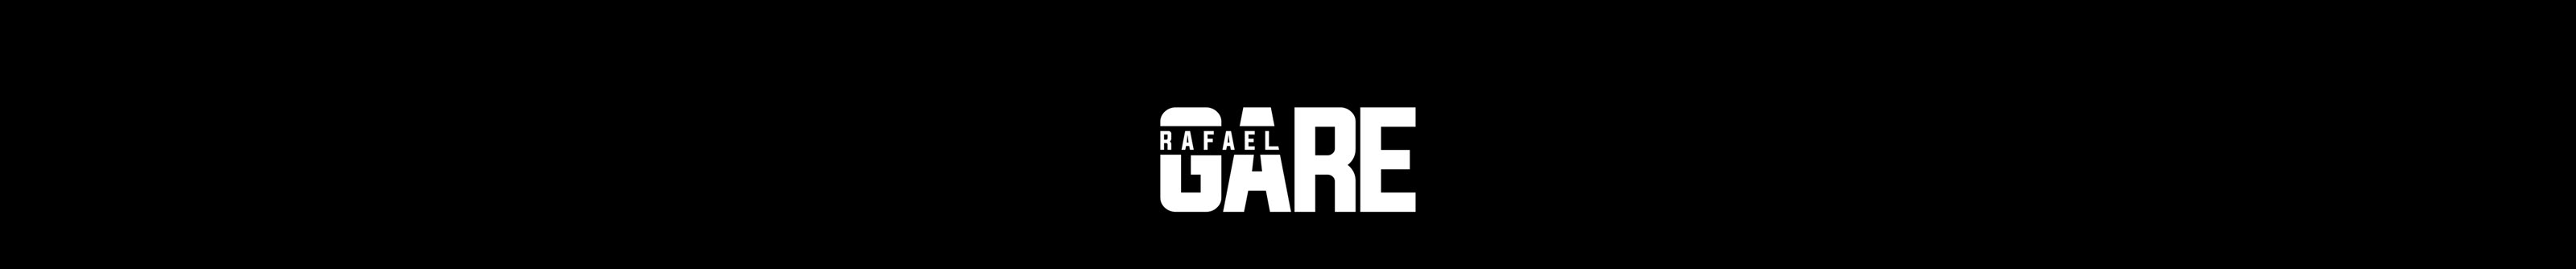 Baner profilu użytkownika Rafael Garé